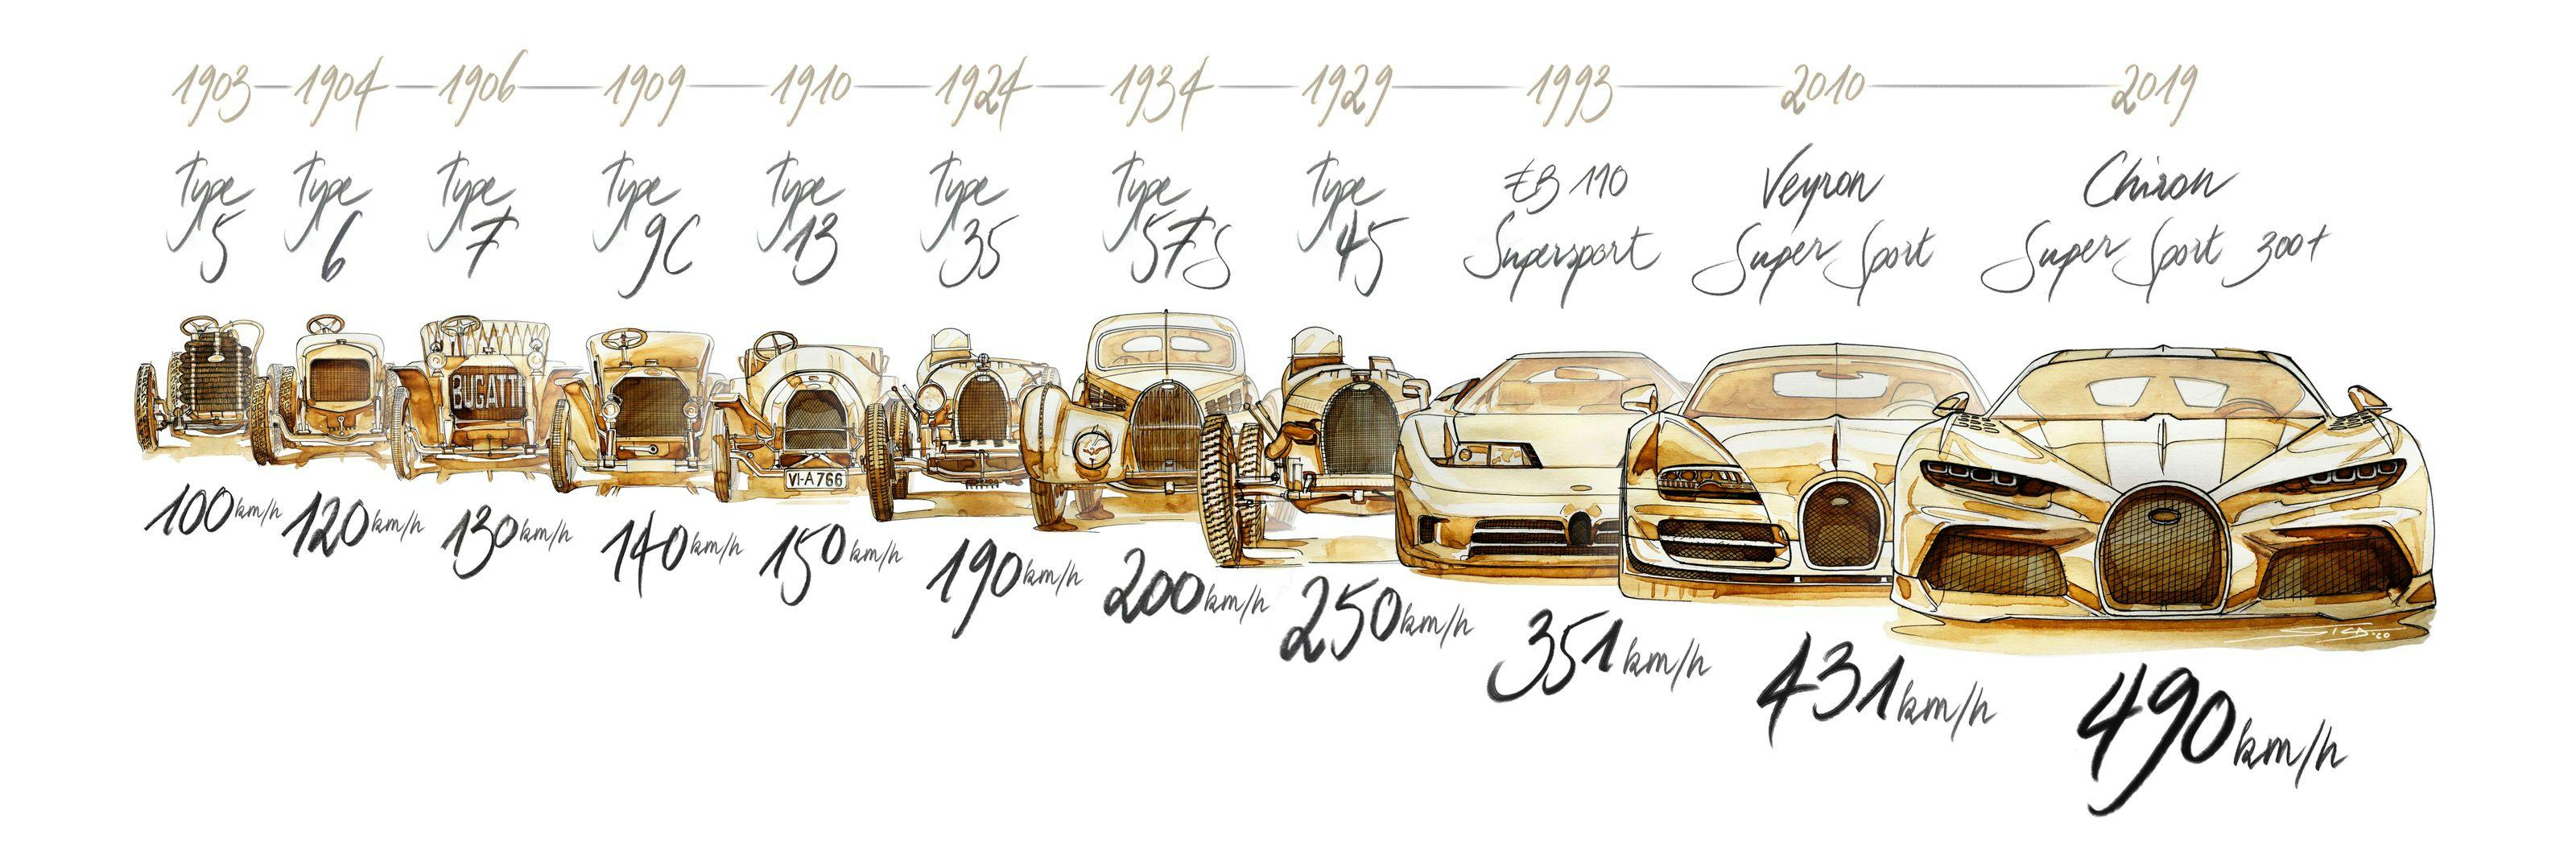 Bugatti Speedline – A record-breaking brand